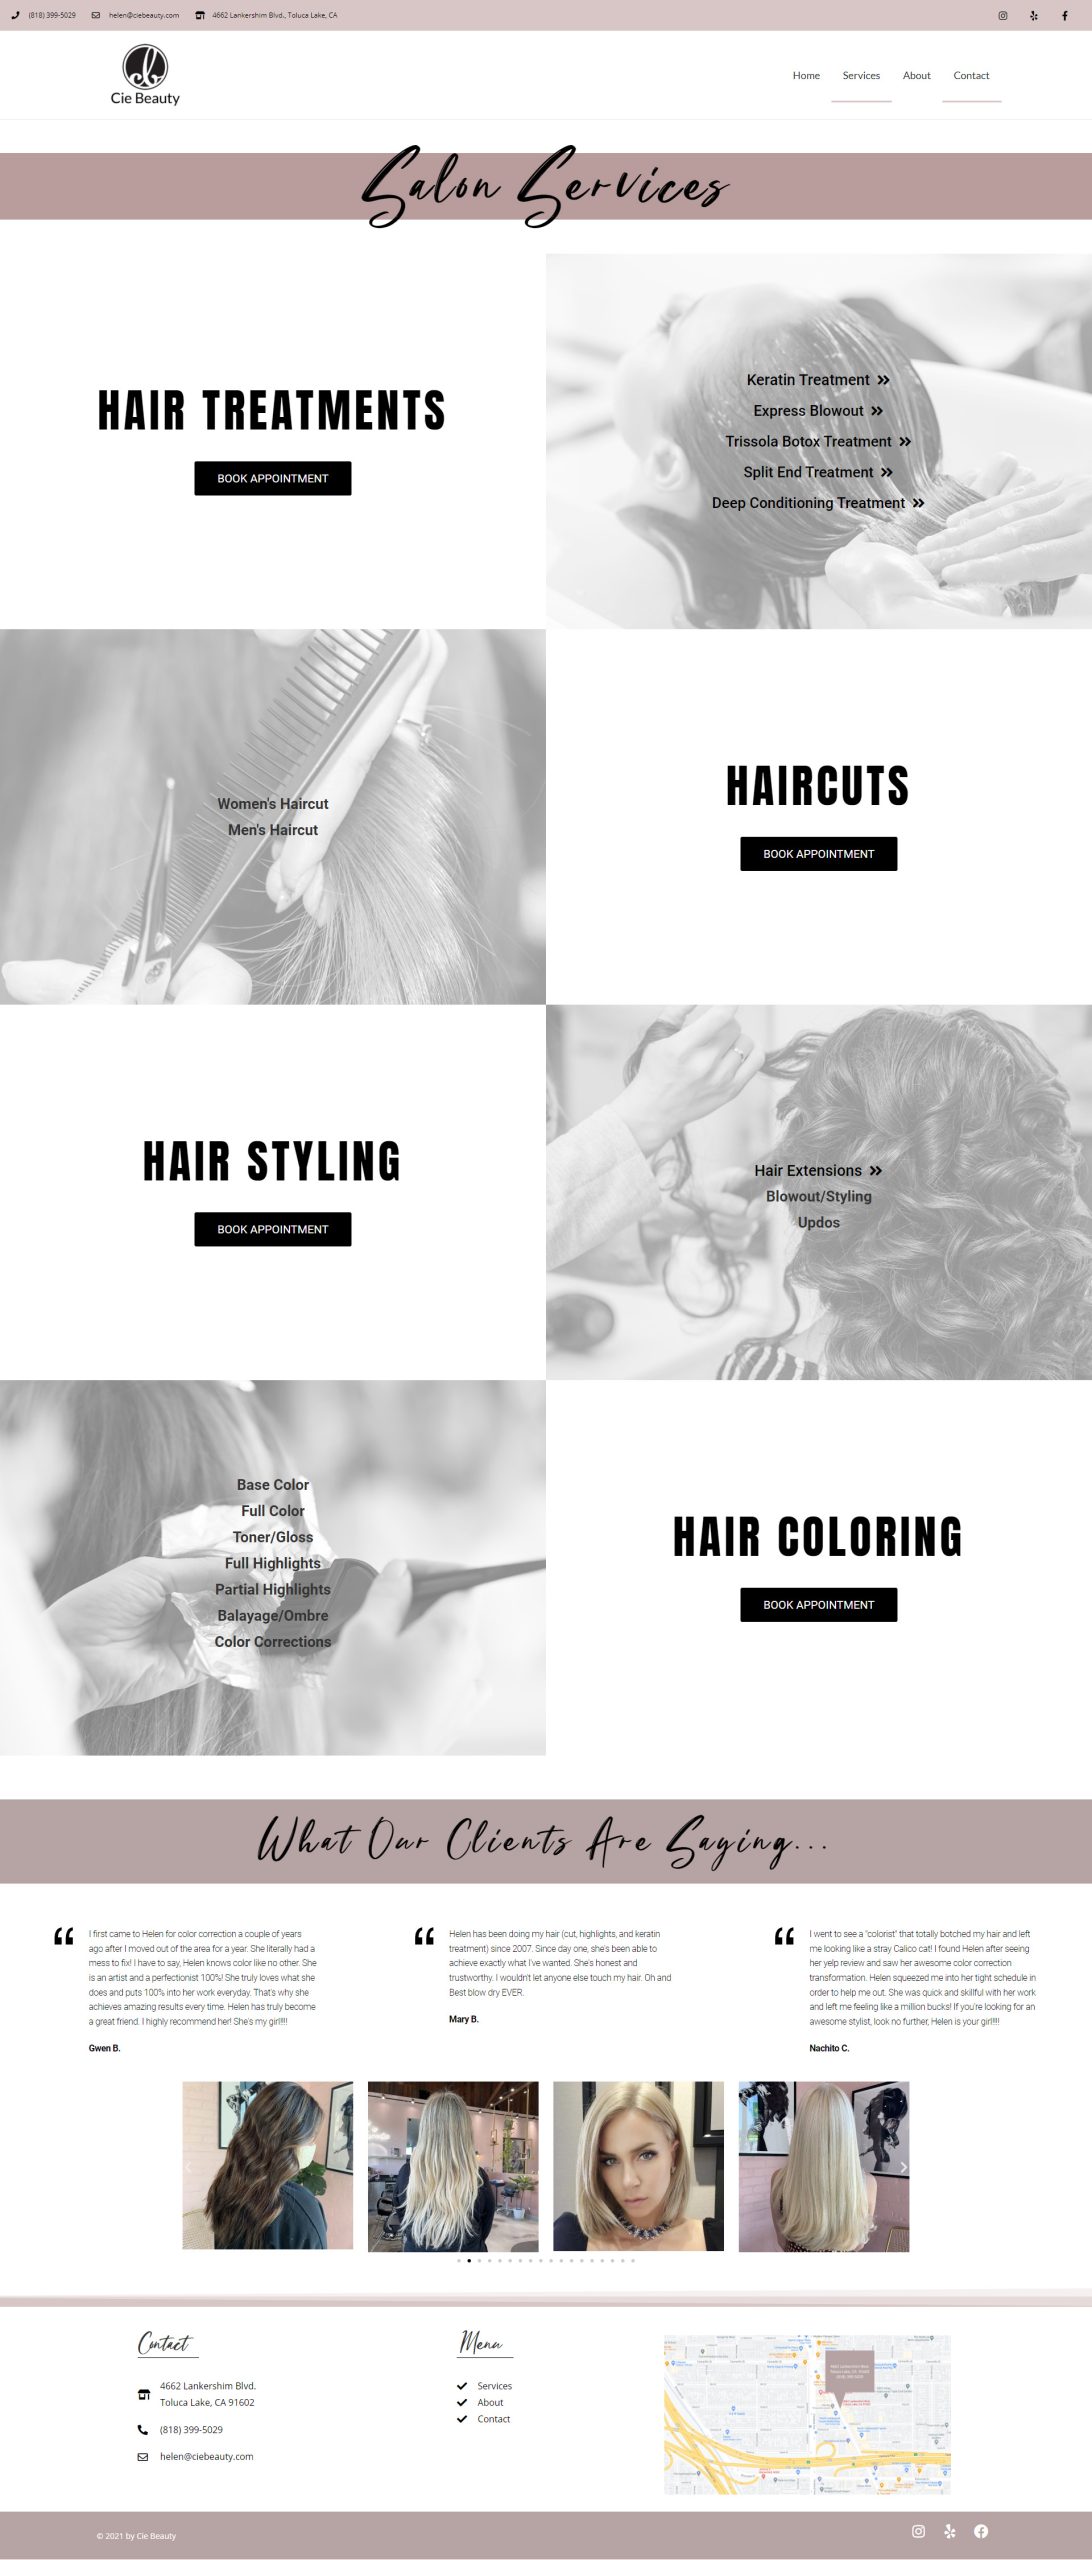 Web Design for Hair Salon | Optimized Website Design | SEO